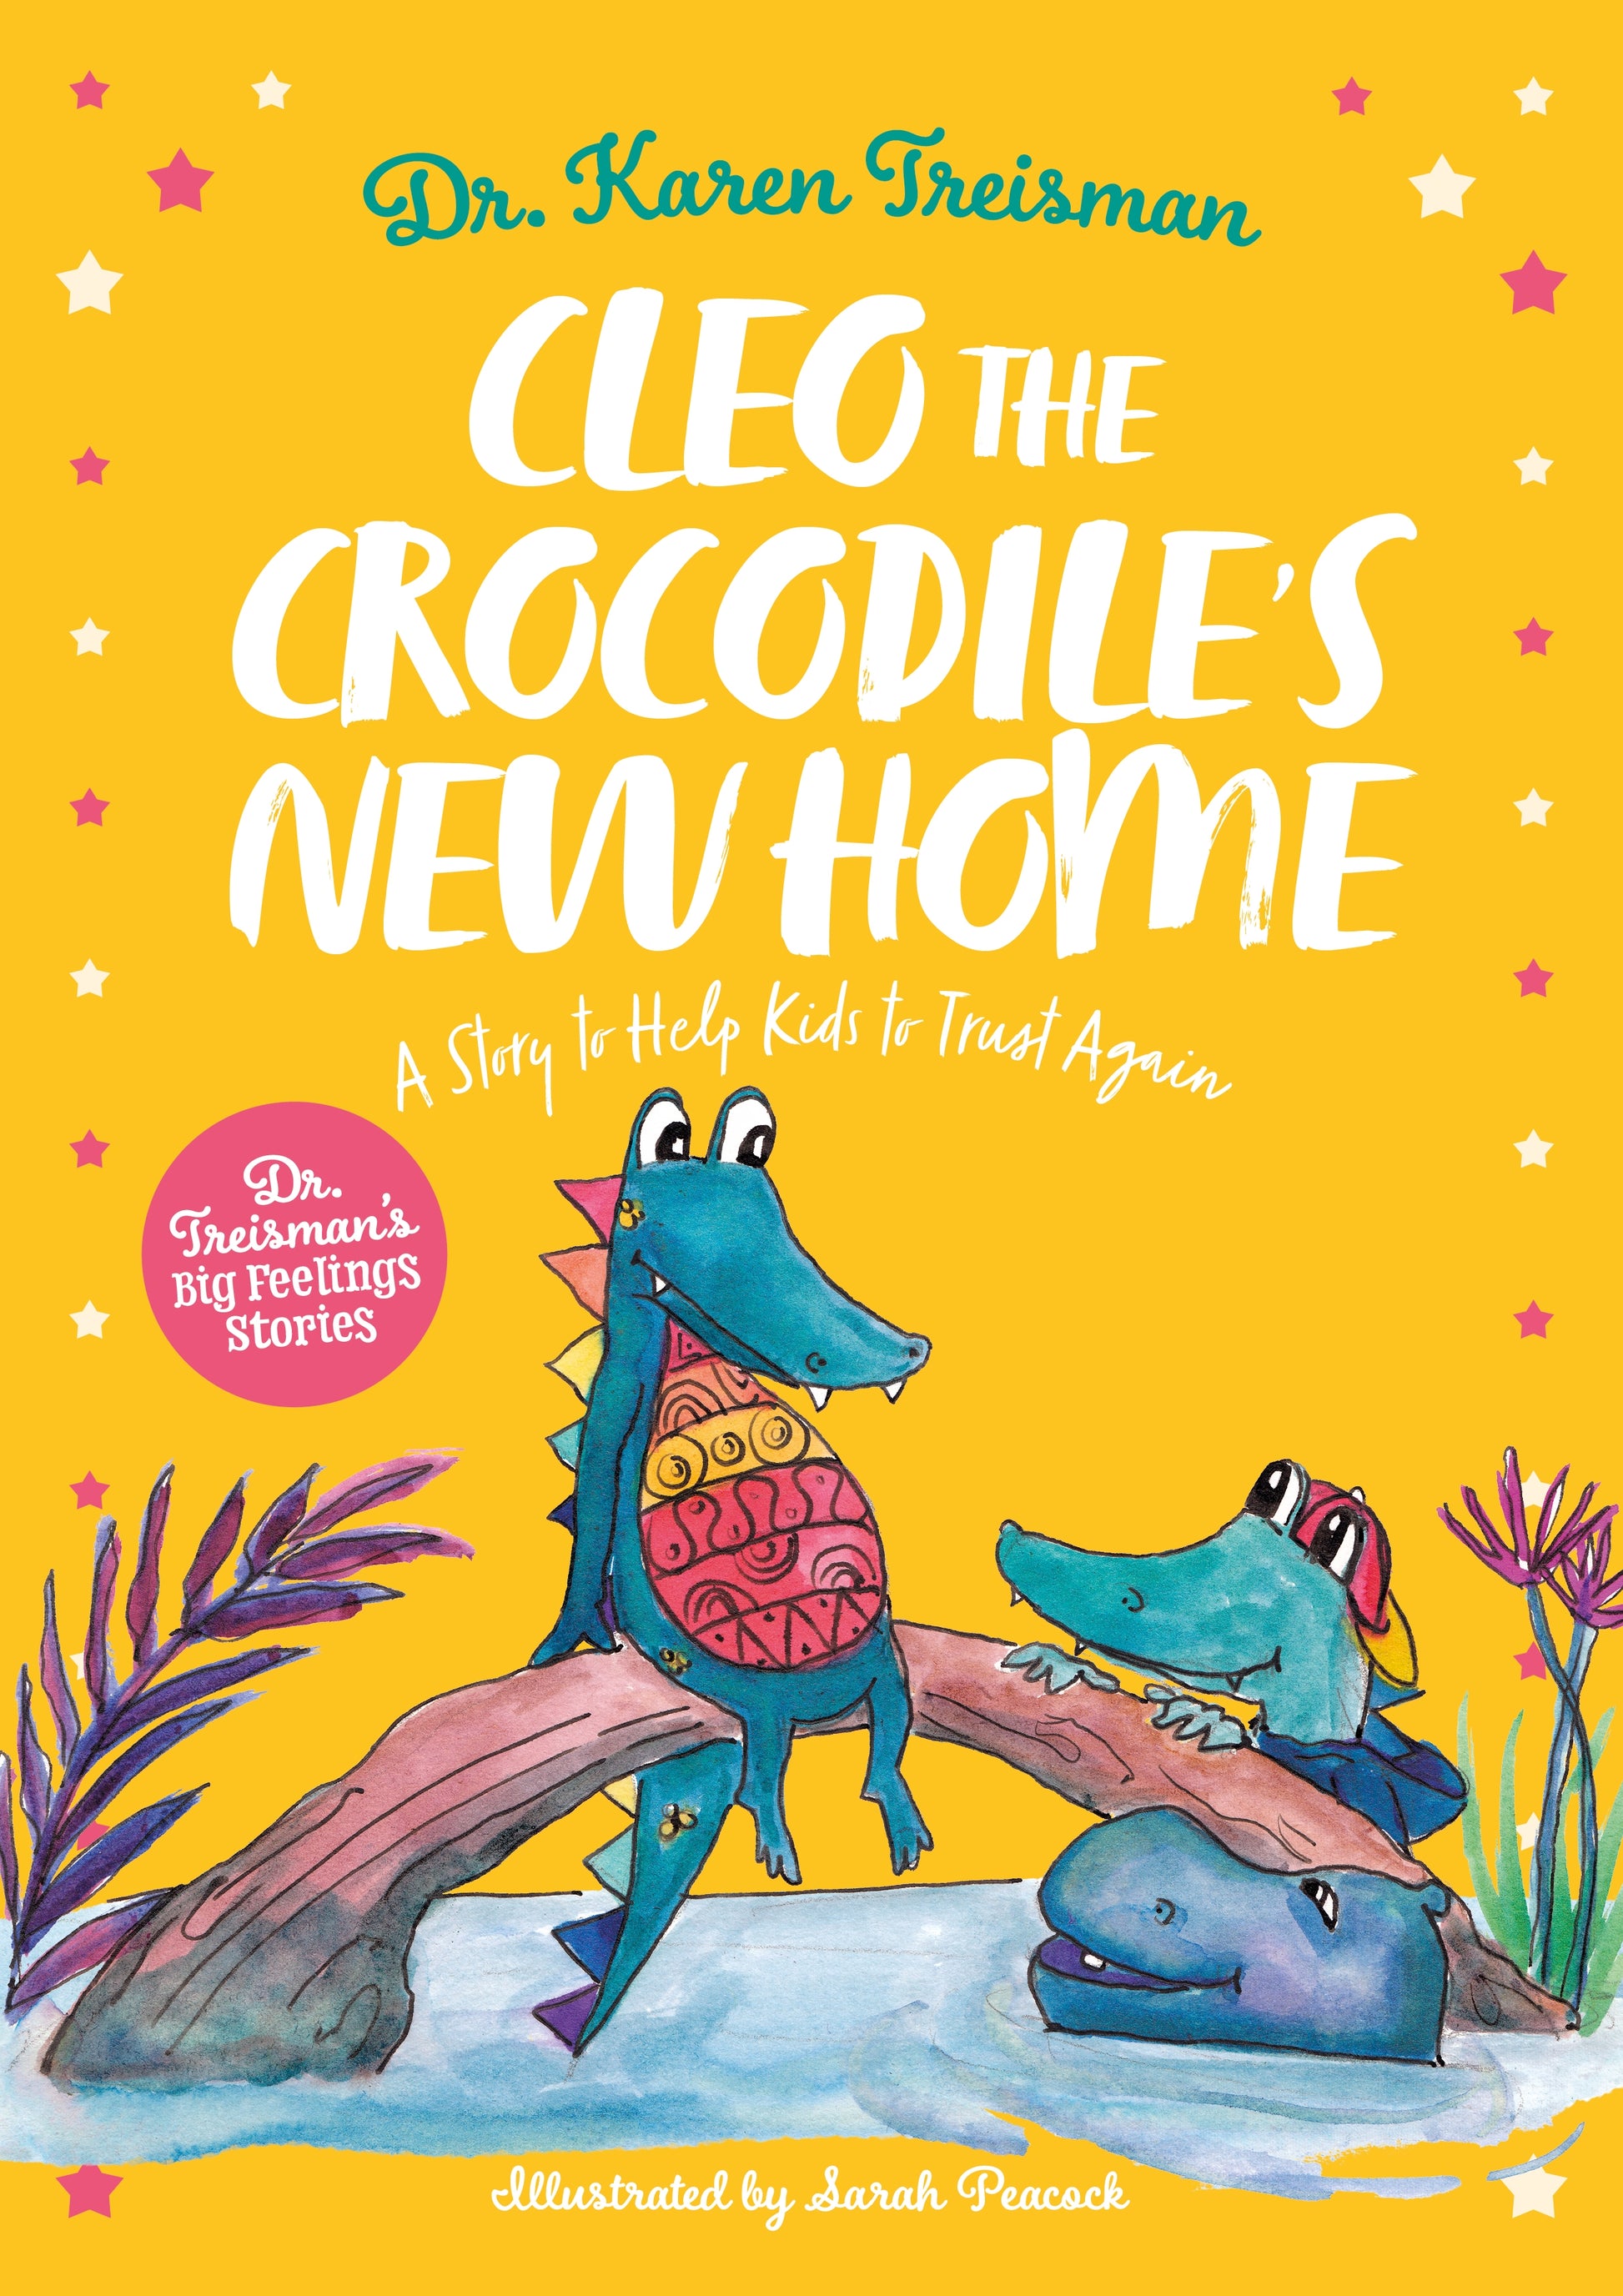 Cleo the Crocodile's New Home by Karen Treisman, Sarah Peacock